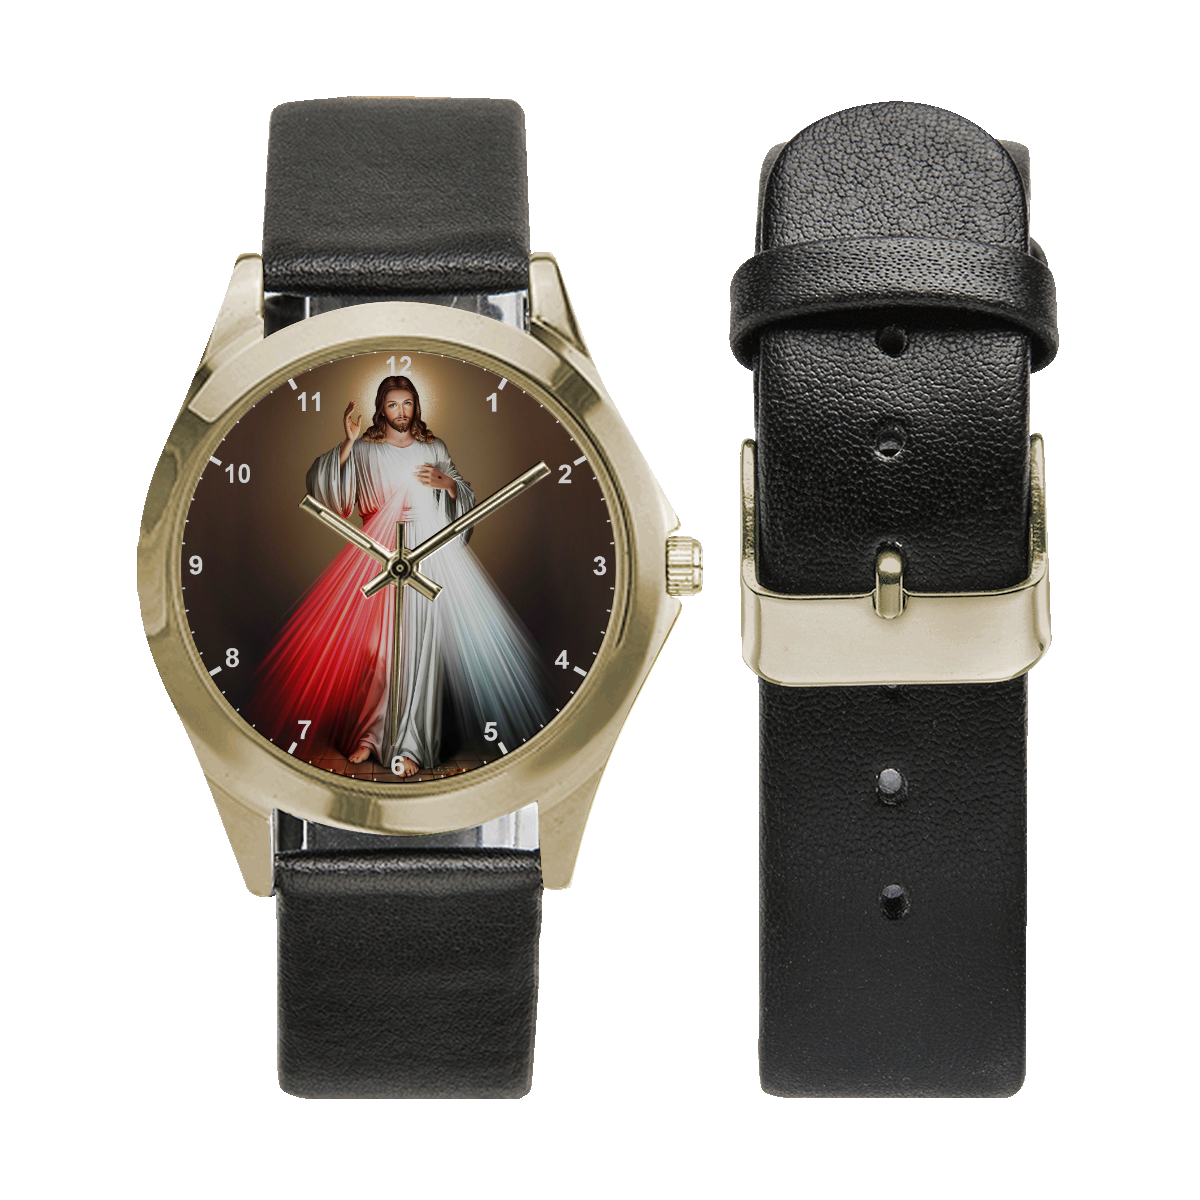 Jesus Christ Unisex Silver-Tone Round Leather Watch (Model 216)